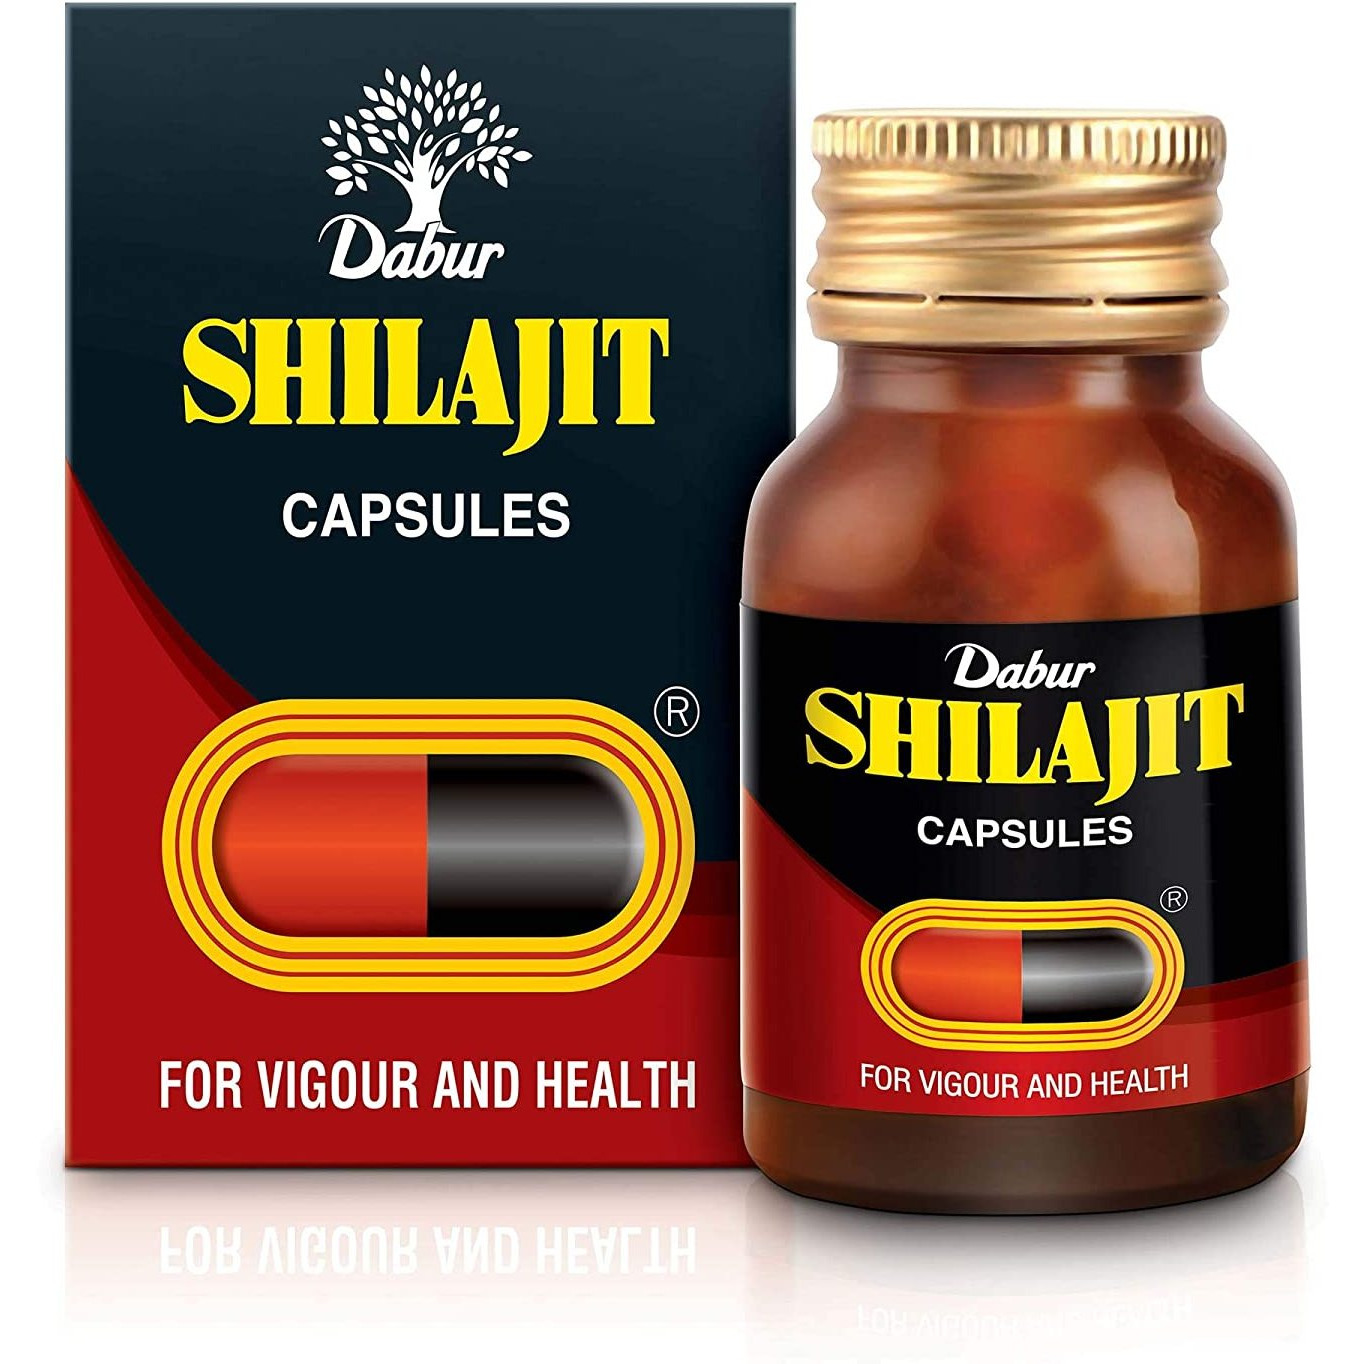 Dabur Shilajit Capsules 100 capsules